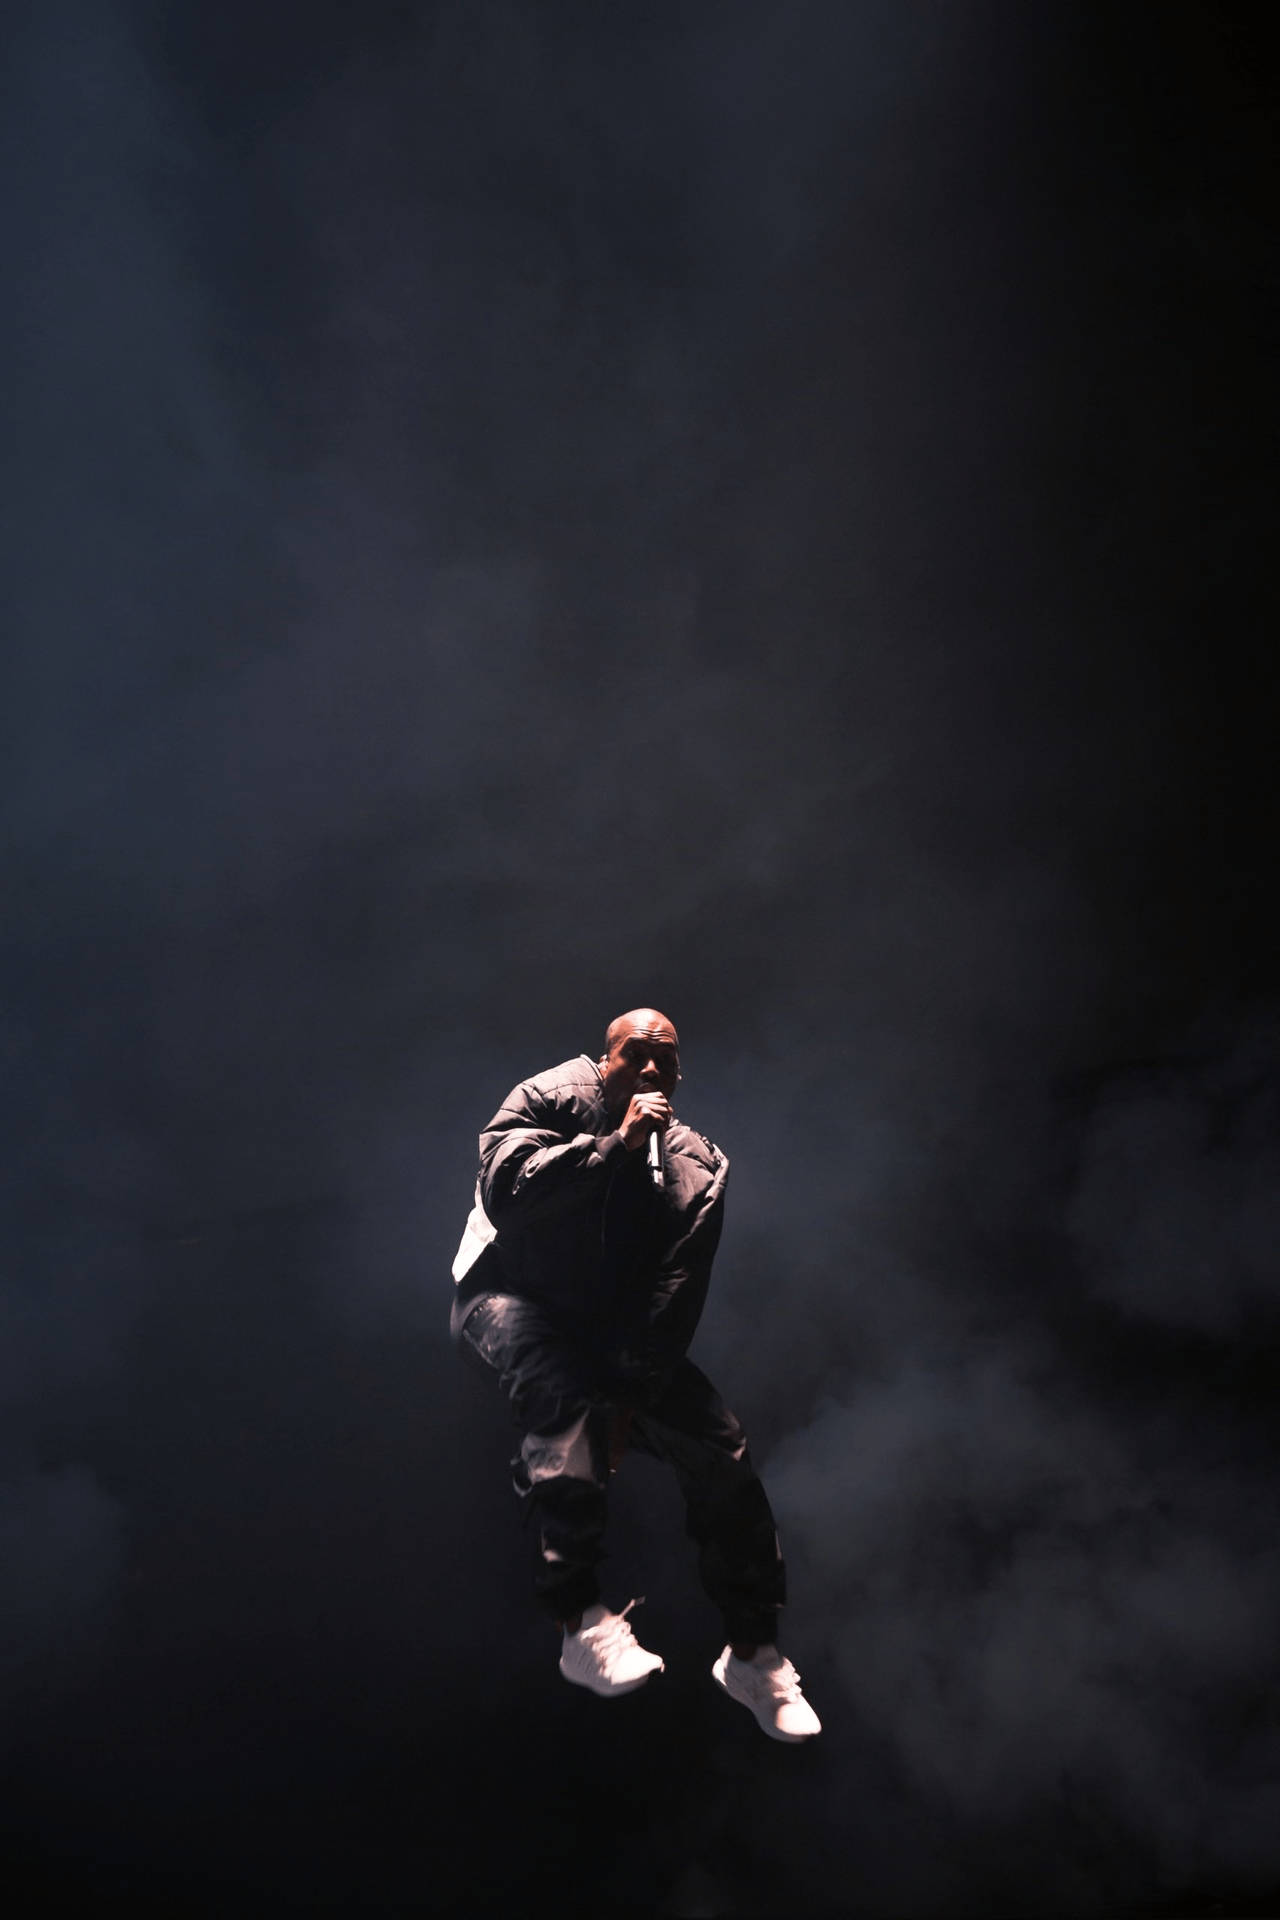 Kanye West Jumping Midair Wallpaper